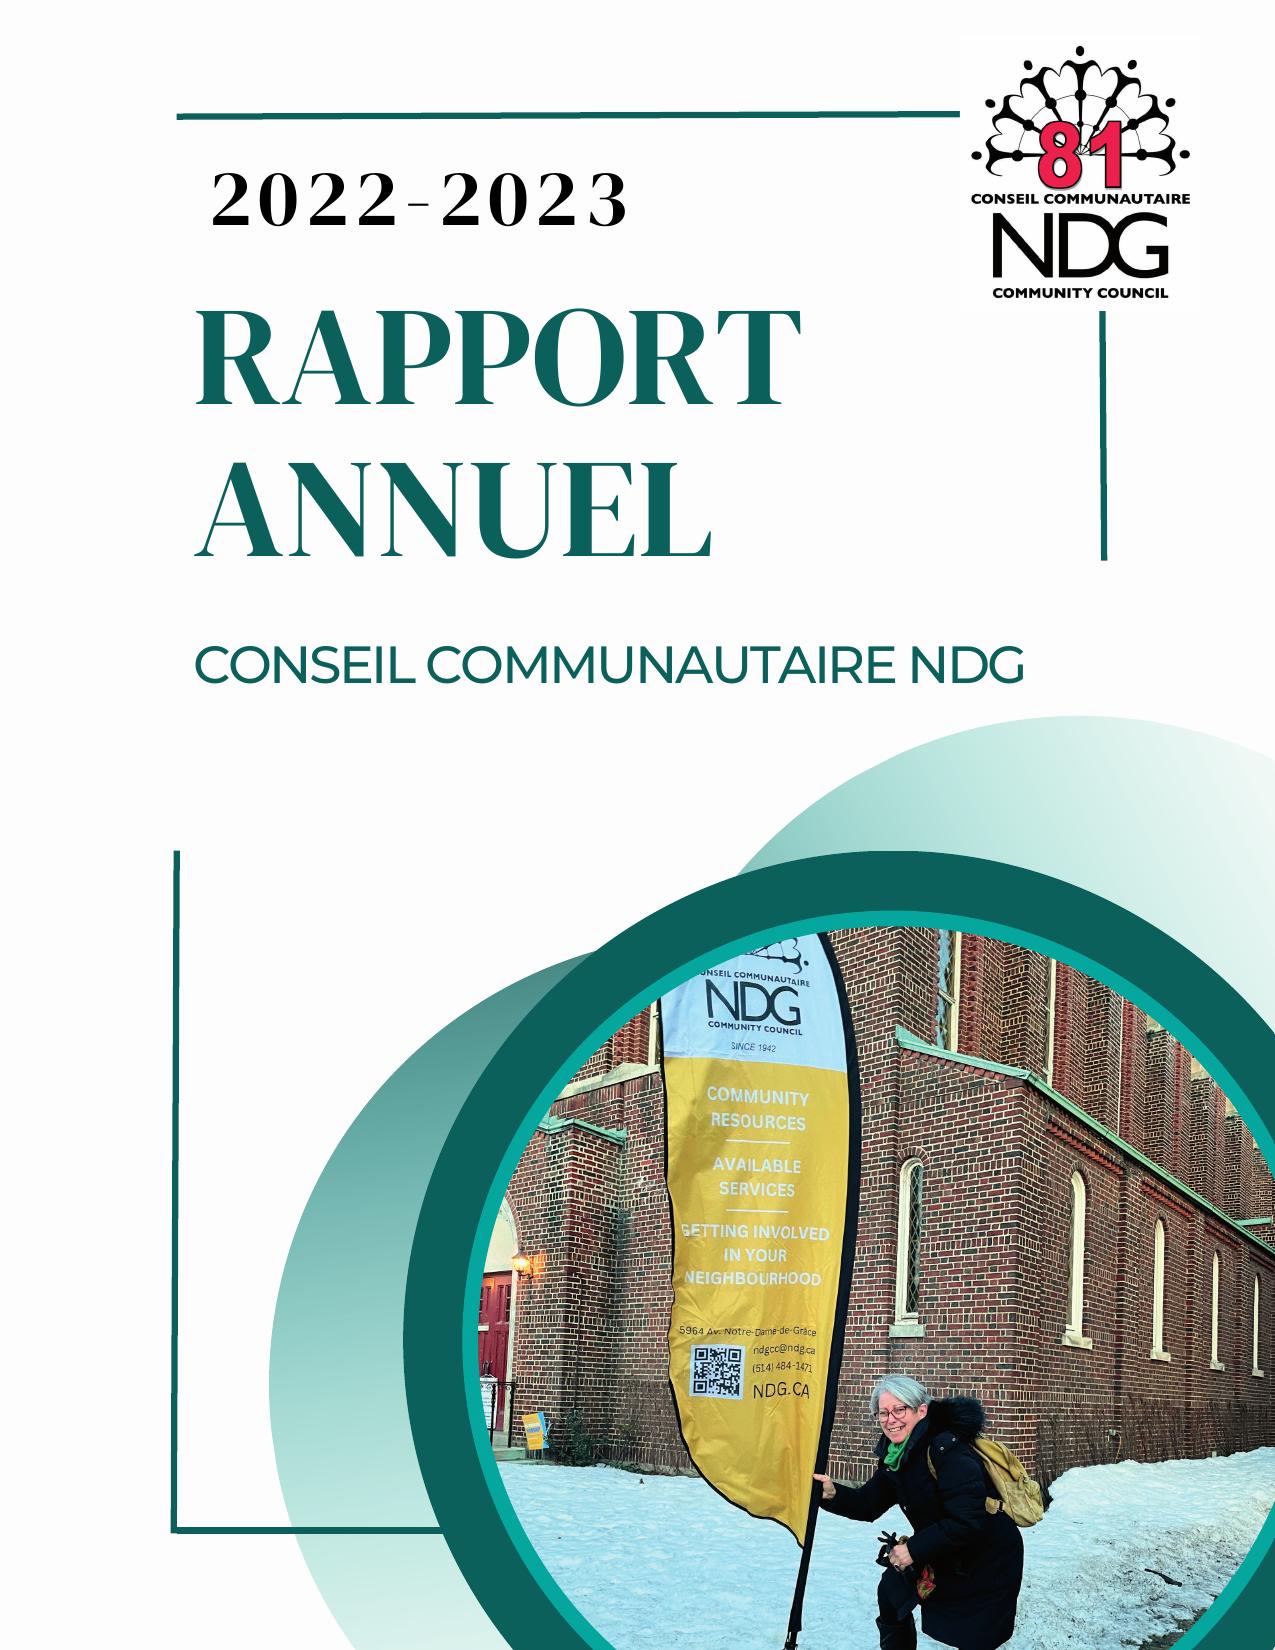 NDG 2023 Annual Report